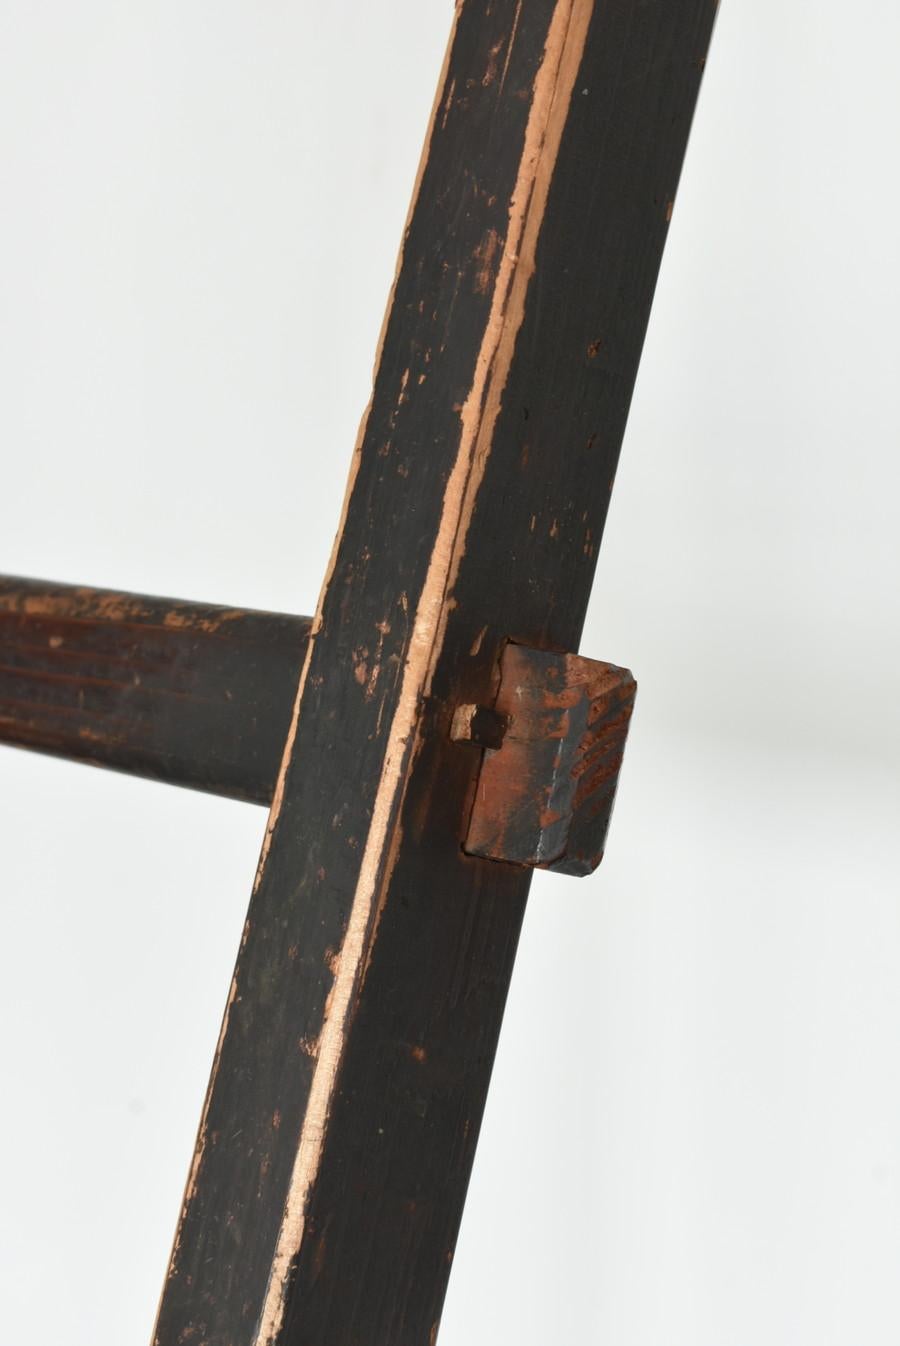 Cedar Japanese Antique Wooden Ladder/Wall Hanging Object/Meiji Period /1868-1920